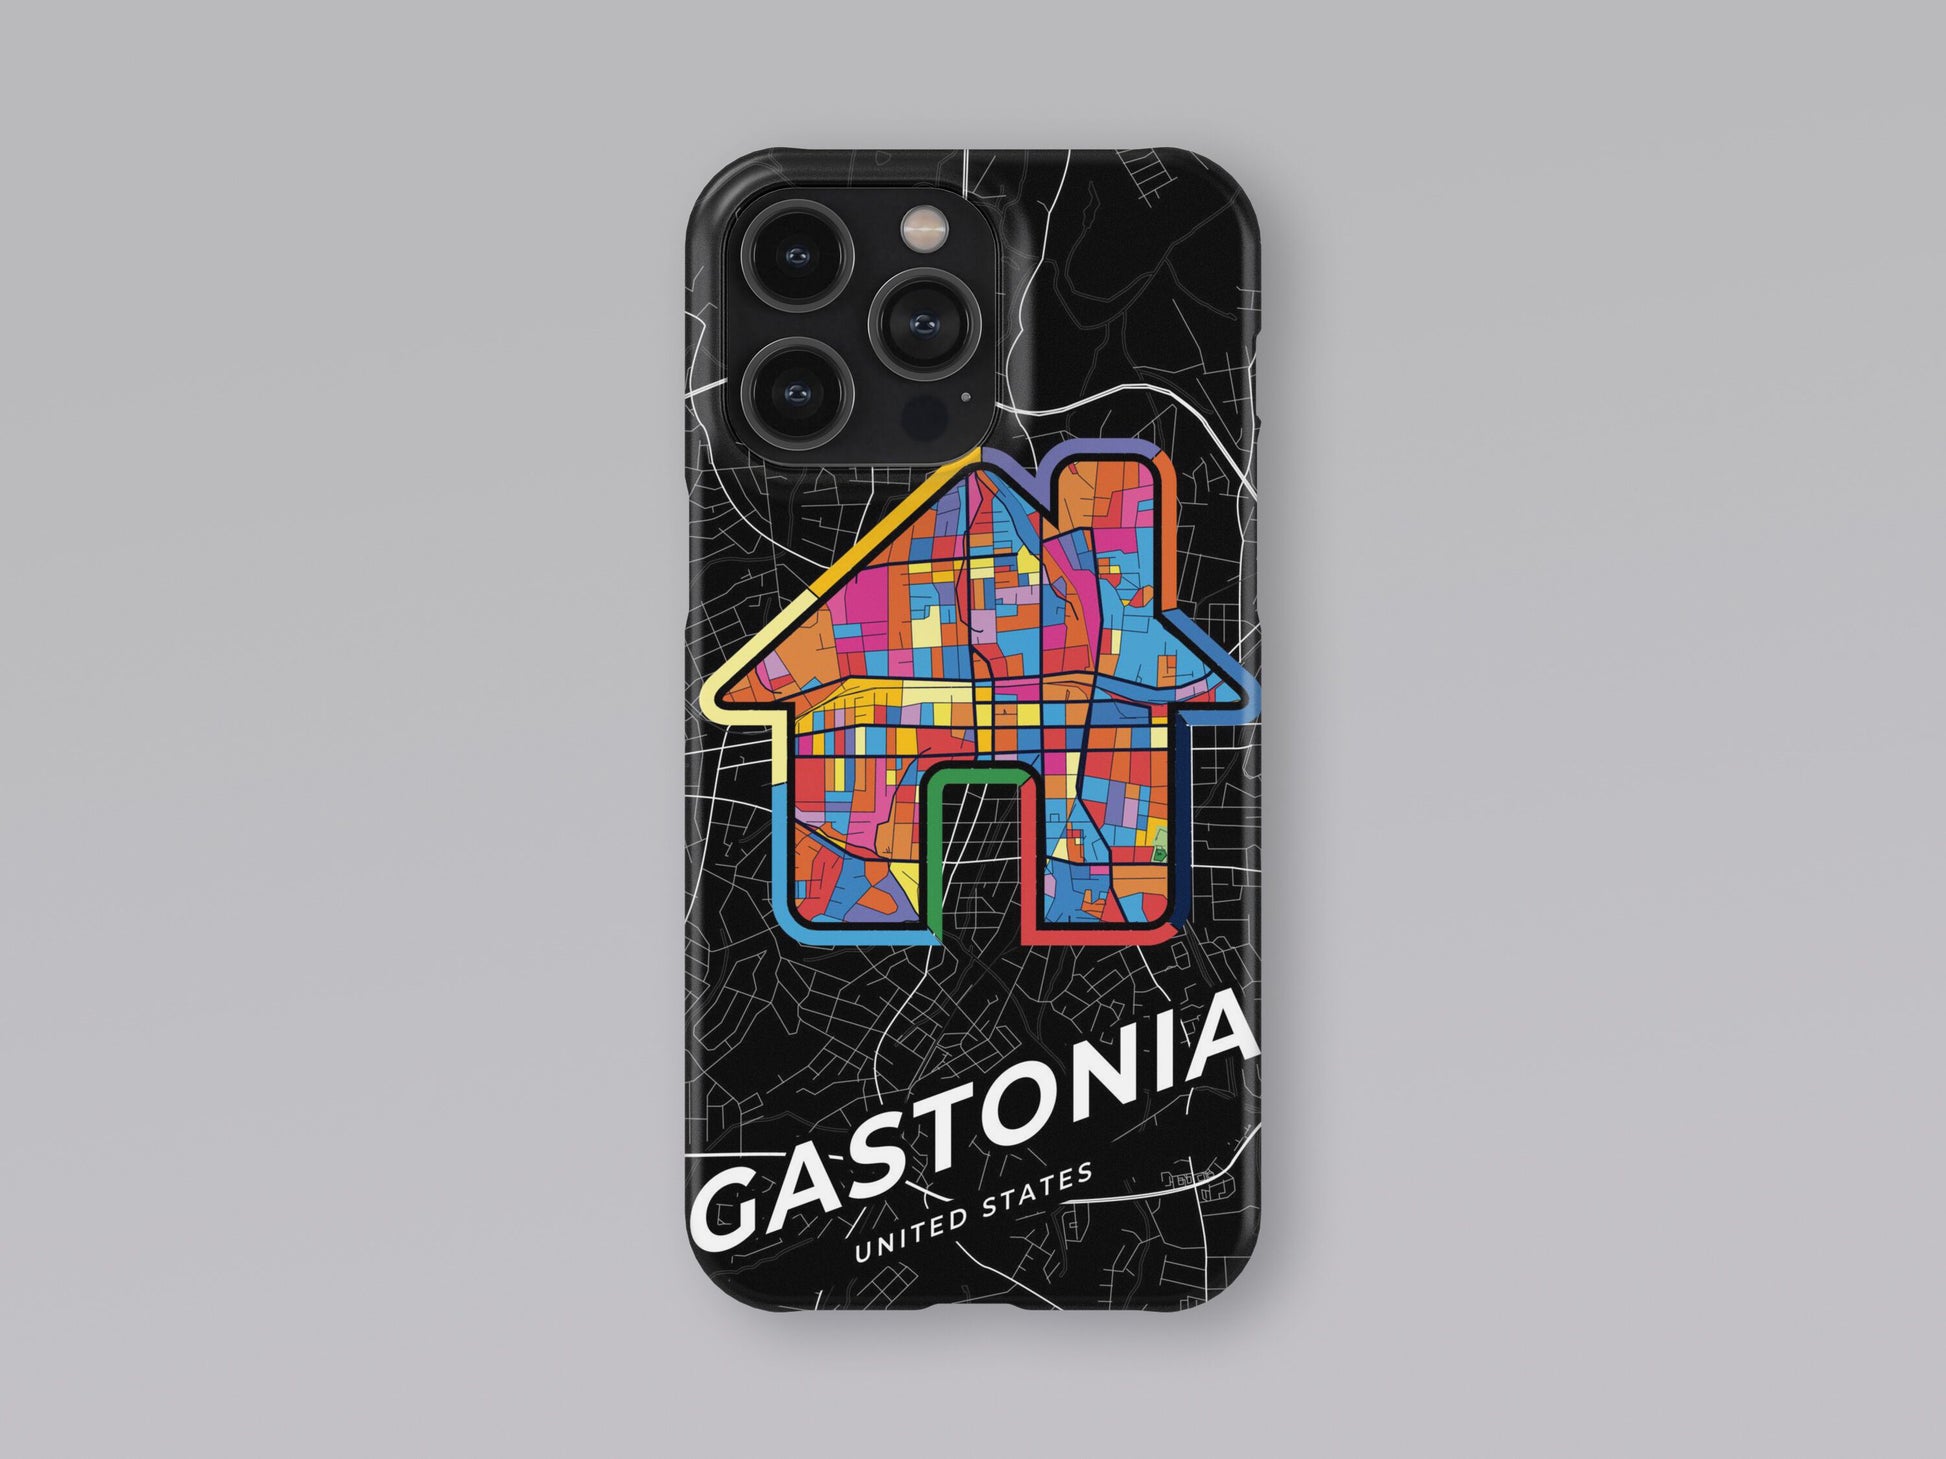 Gastonia North Carolina slim phone case with colorful icon. Birthday, wedding or housewarming gift. Couple match cases. 3